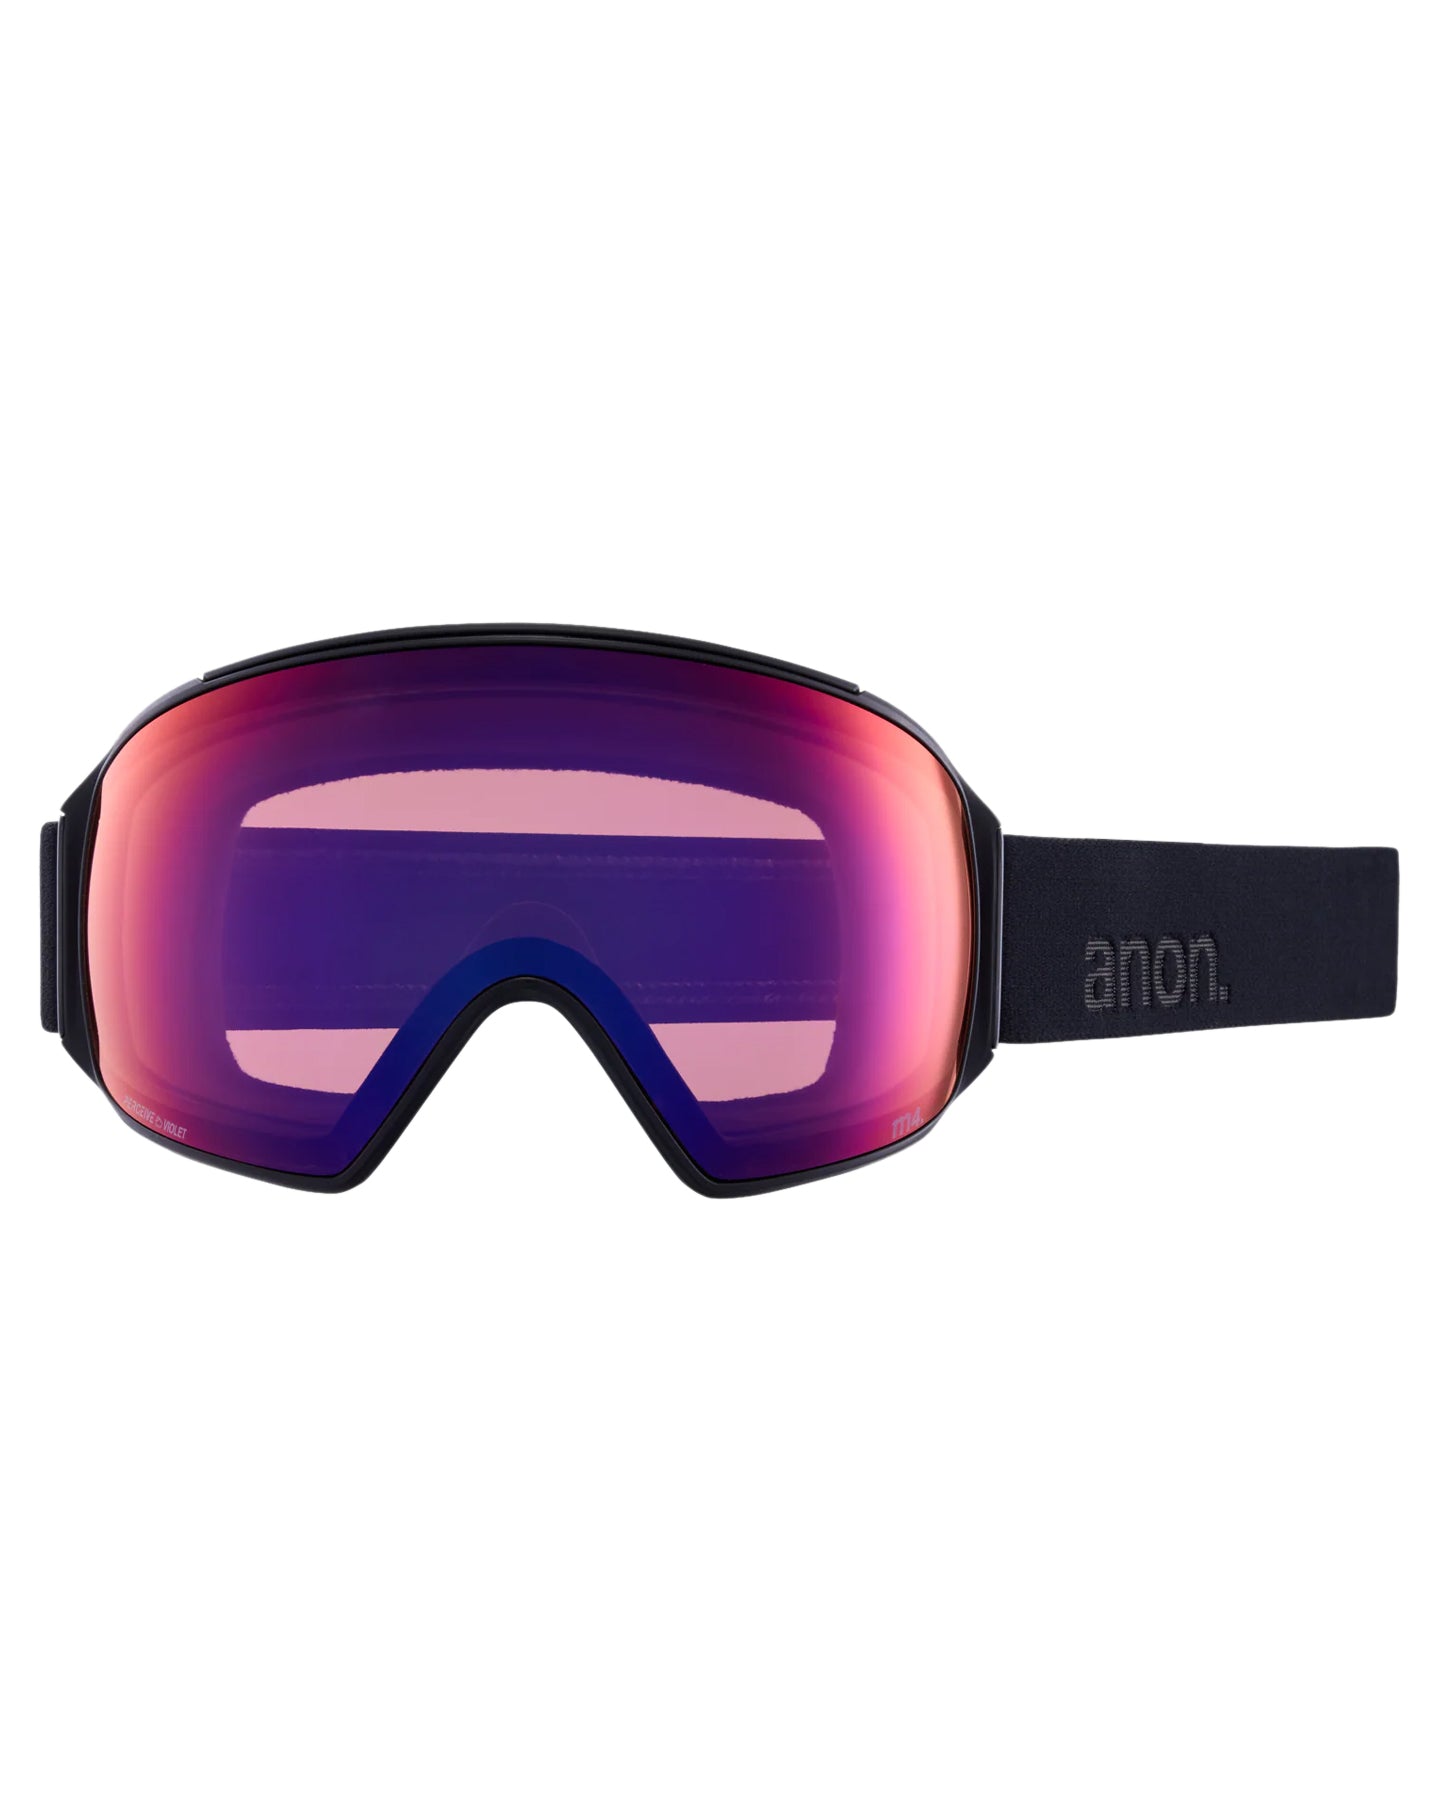 Anon M4 Toric Low Bridge Snow Goggles + Bonus Lens + Mfi® Face Mask - Smoke/Perceive Sunny Onyx Lens Men's Snow Goggles - Trojan Wake Ski Snow